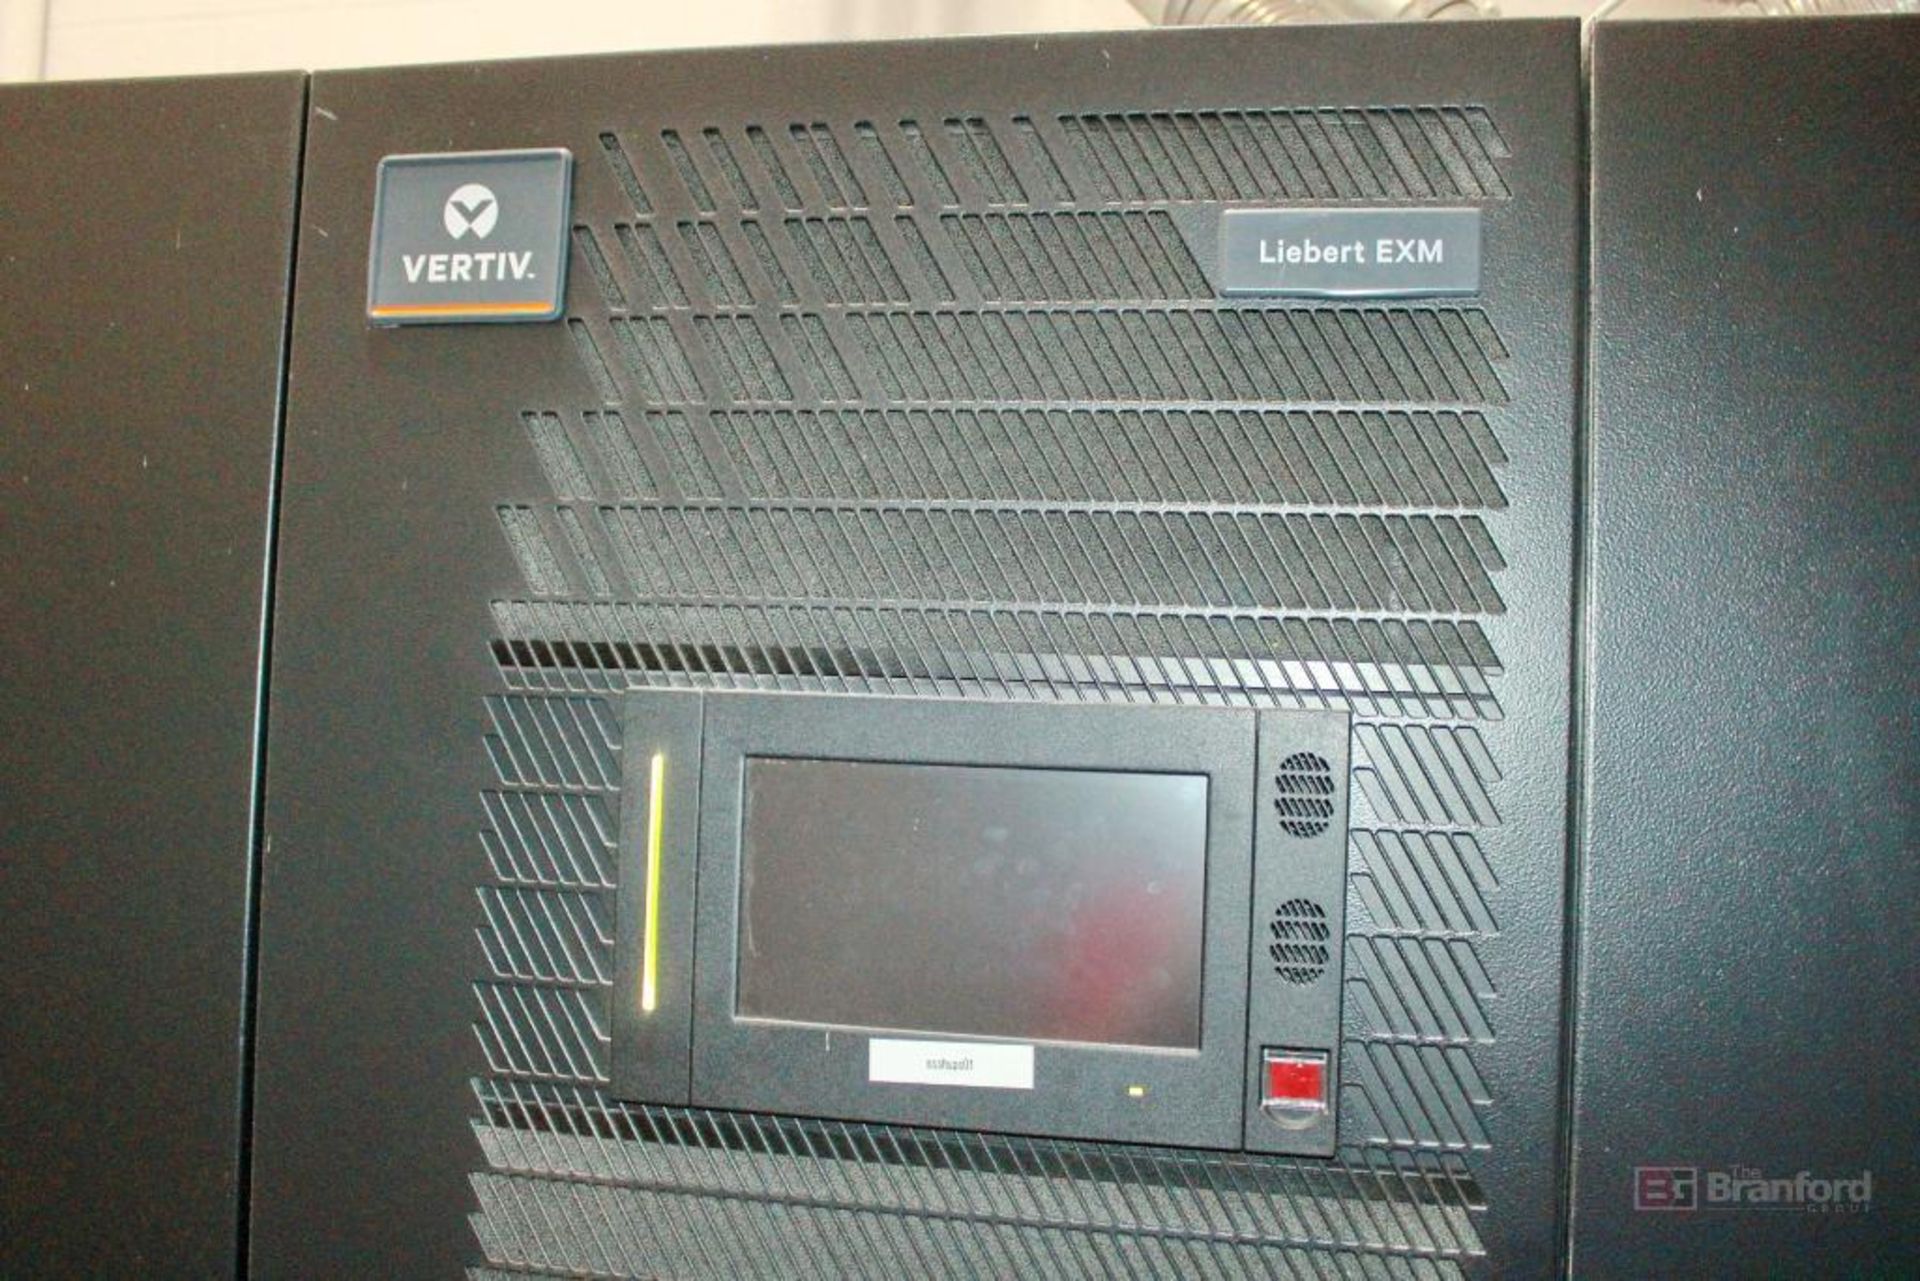 Vertiv Liebert EXM 51SA250NAA011AY 250-kVA AC Power UPS System, (2018/2019) - Image 2 of 16